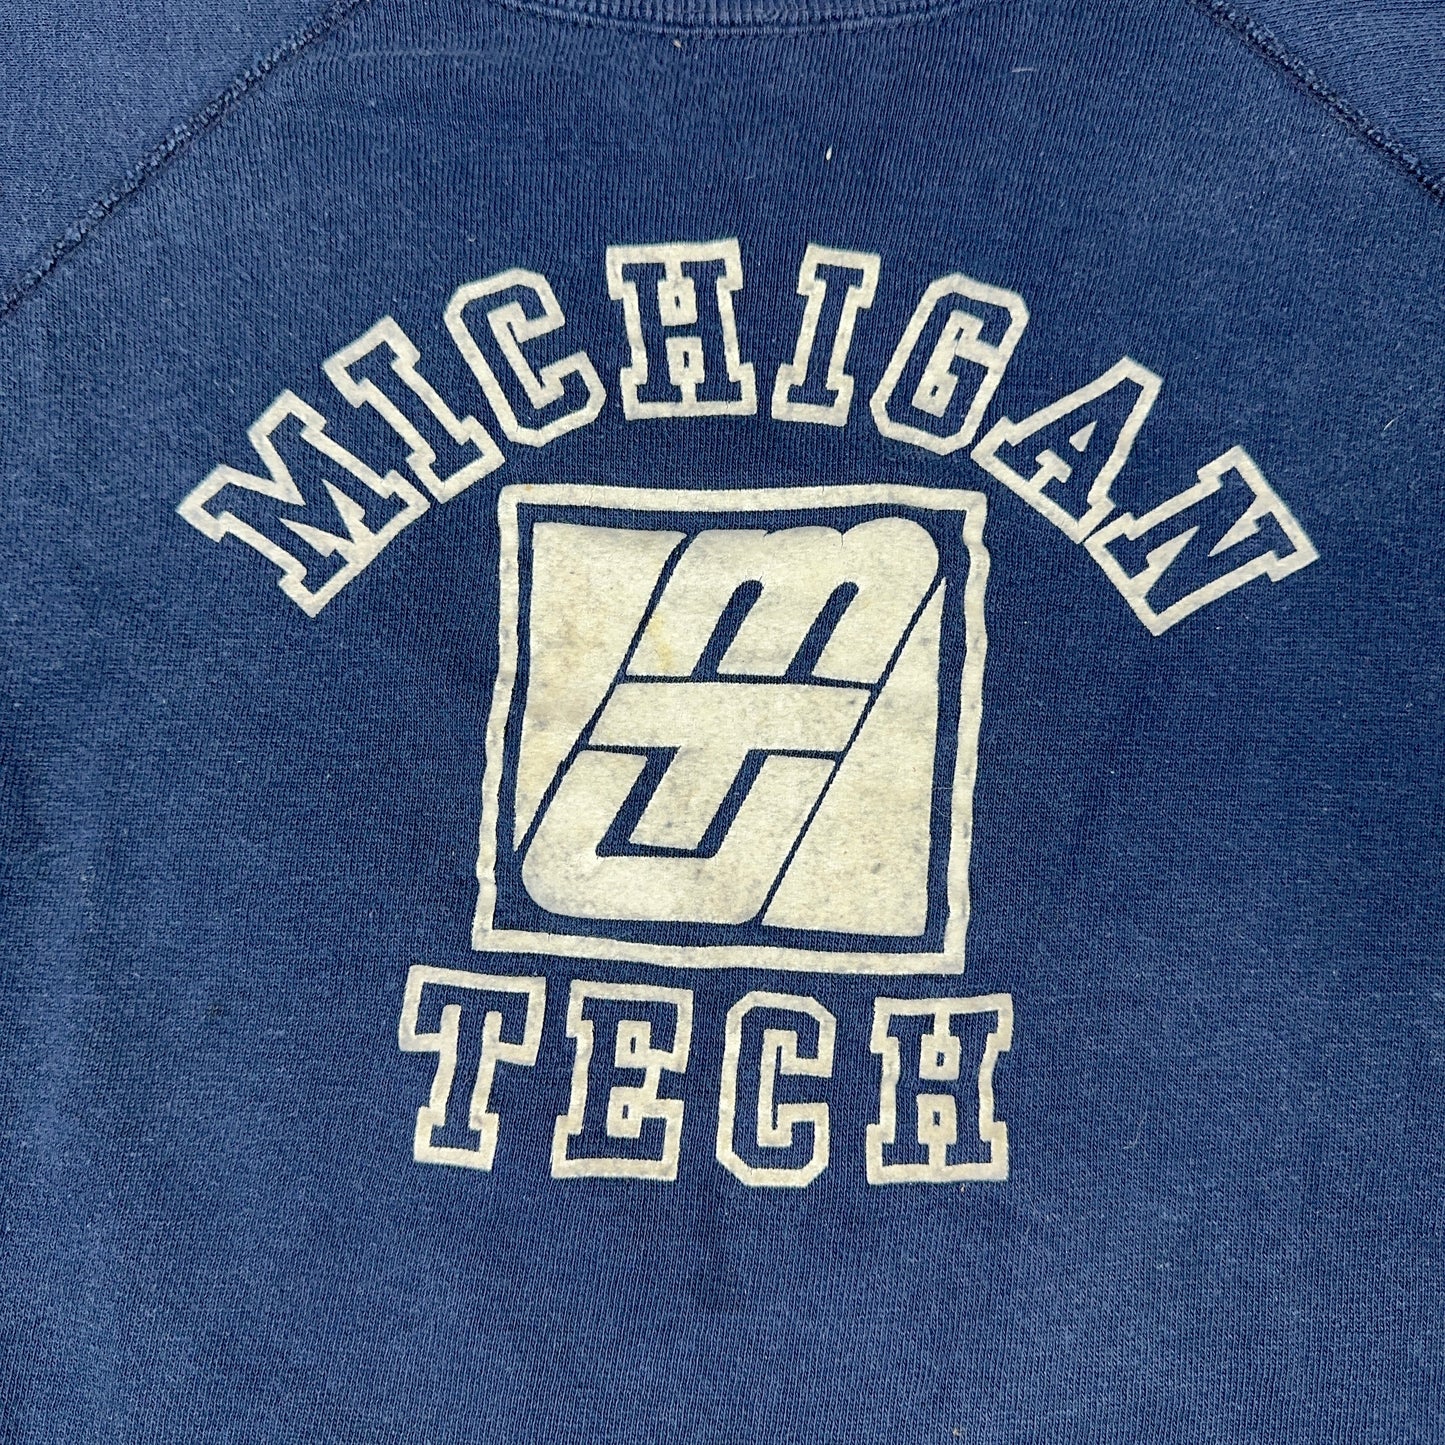 Vintage Michigan Tech University Navy Blue Sweatshirt